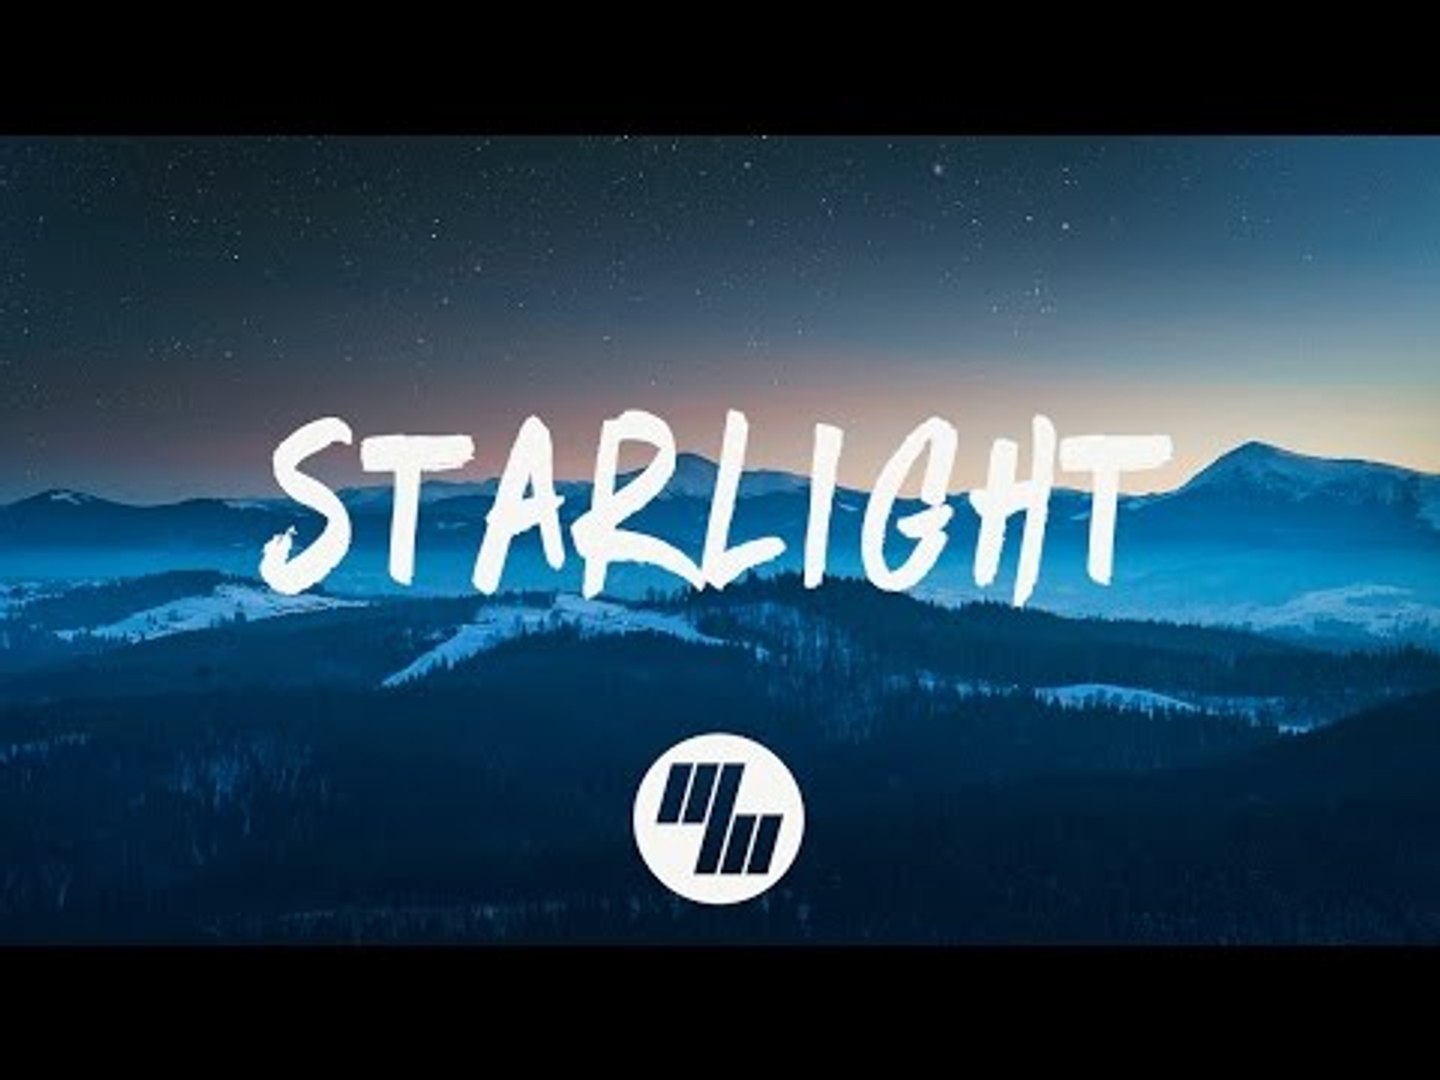 Starlight lyrics